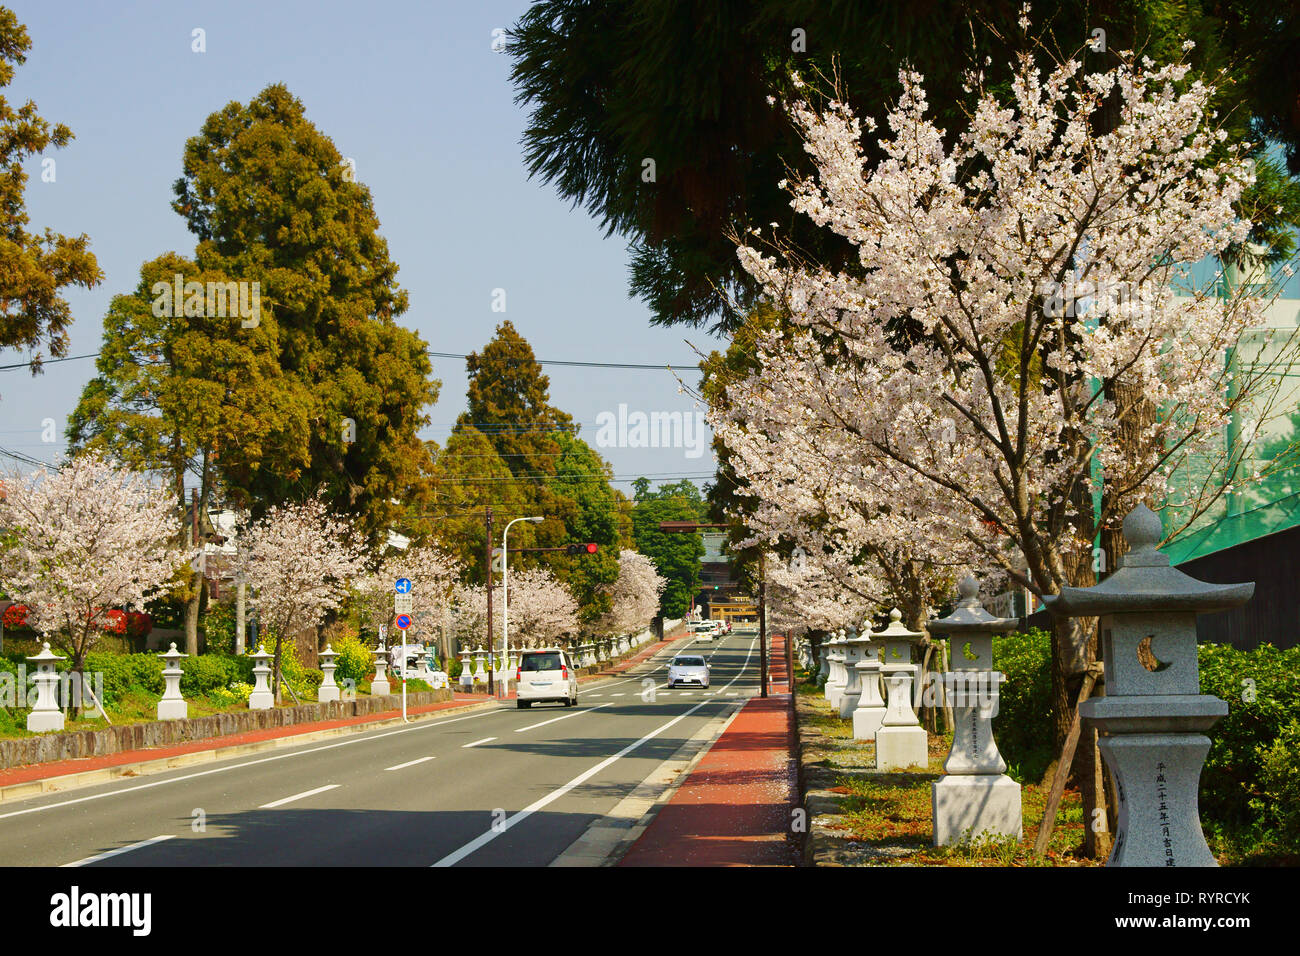 Sando (approach to a shrine) to Kengun Shrine, Kumamoto Prefecture, Japan Stock Photo